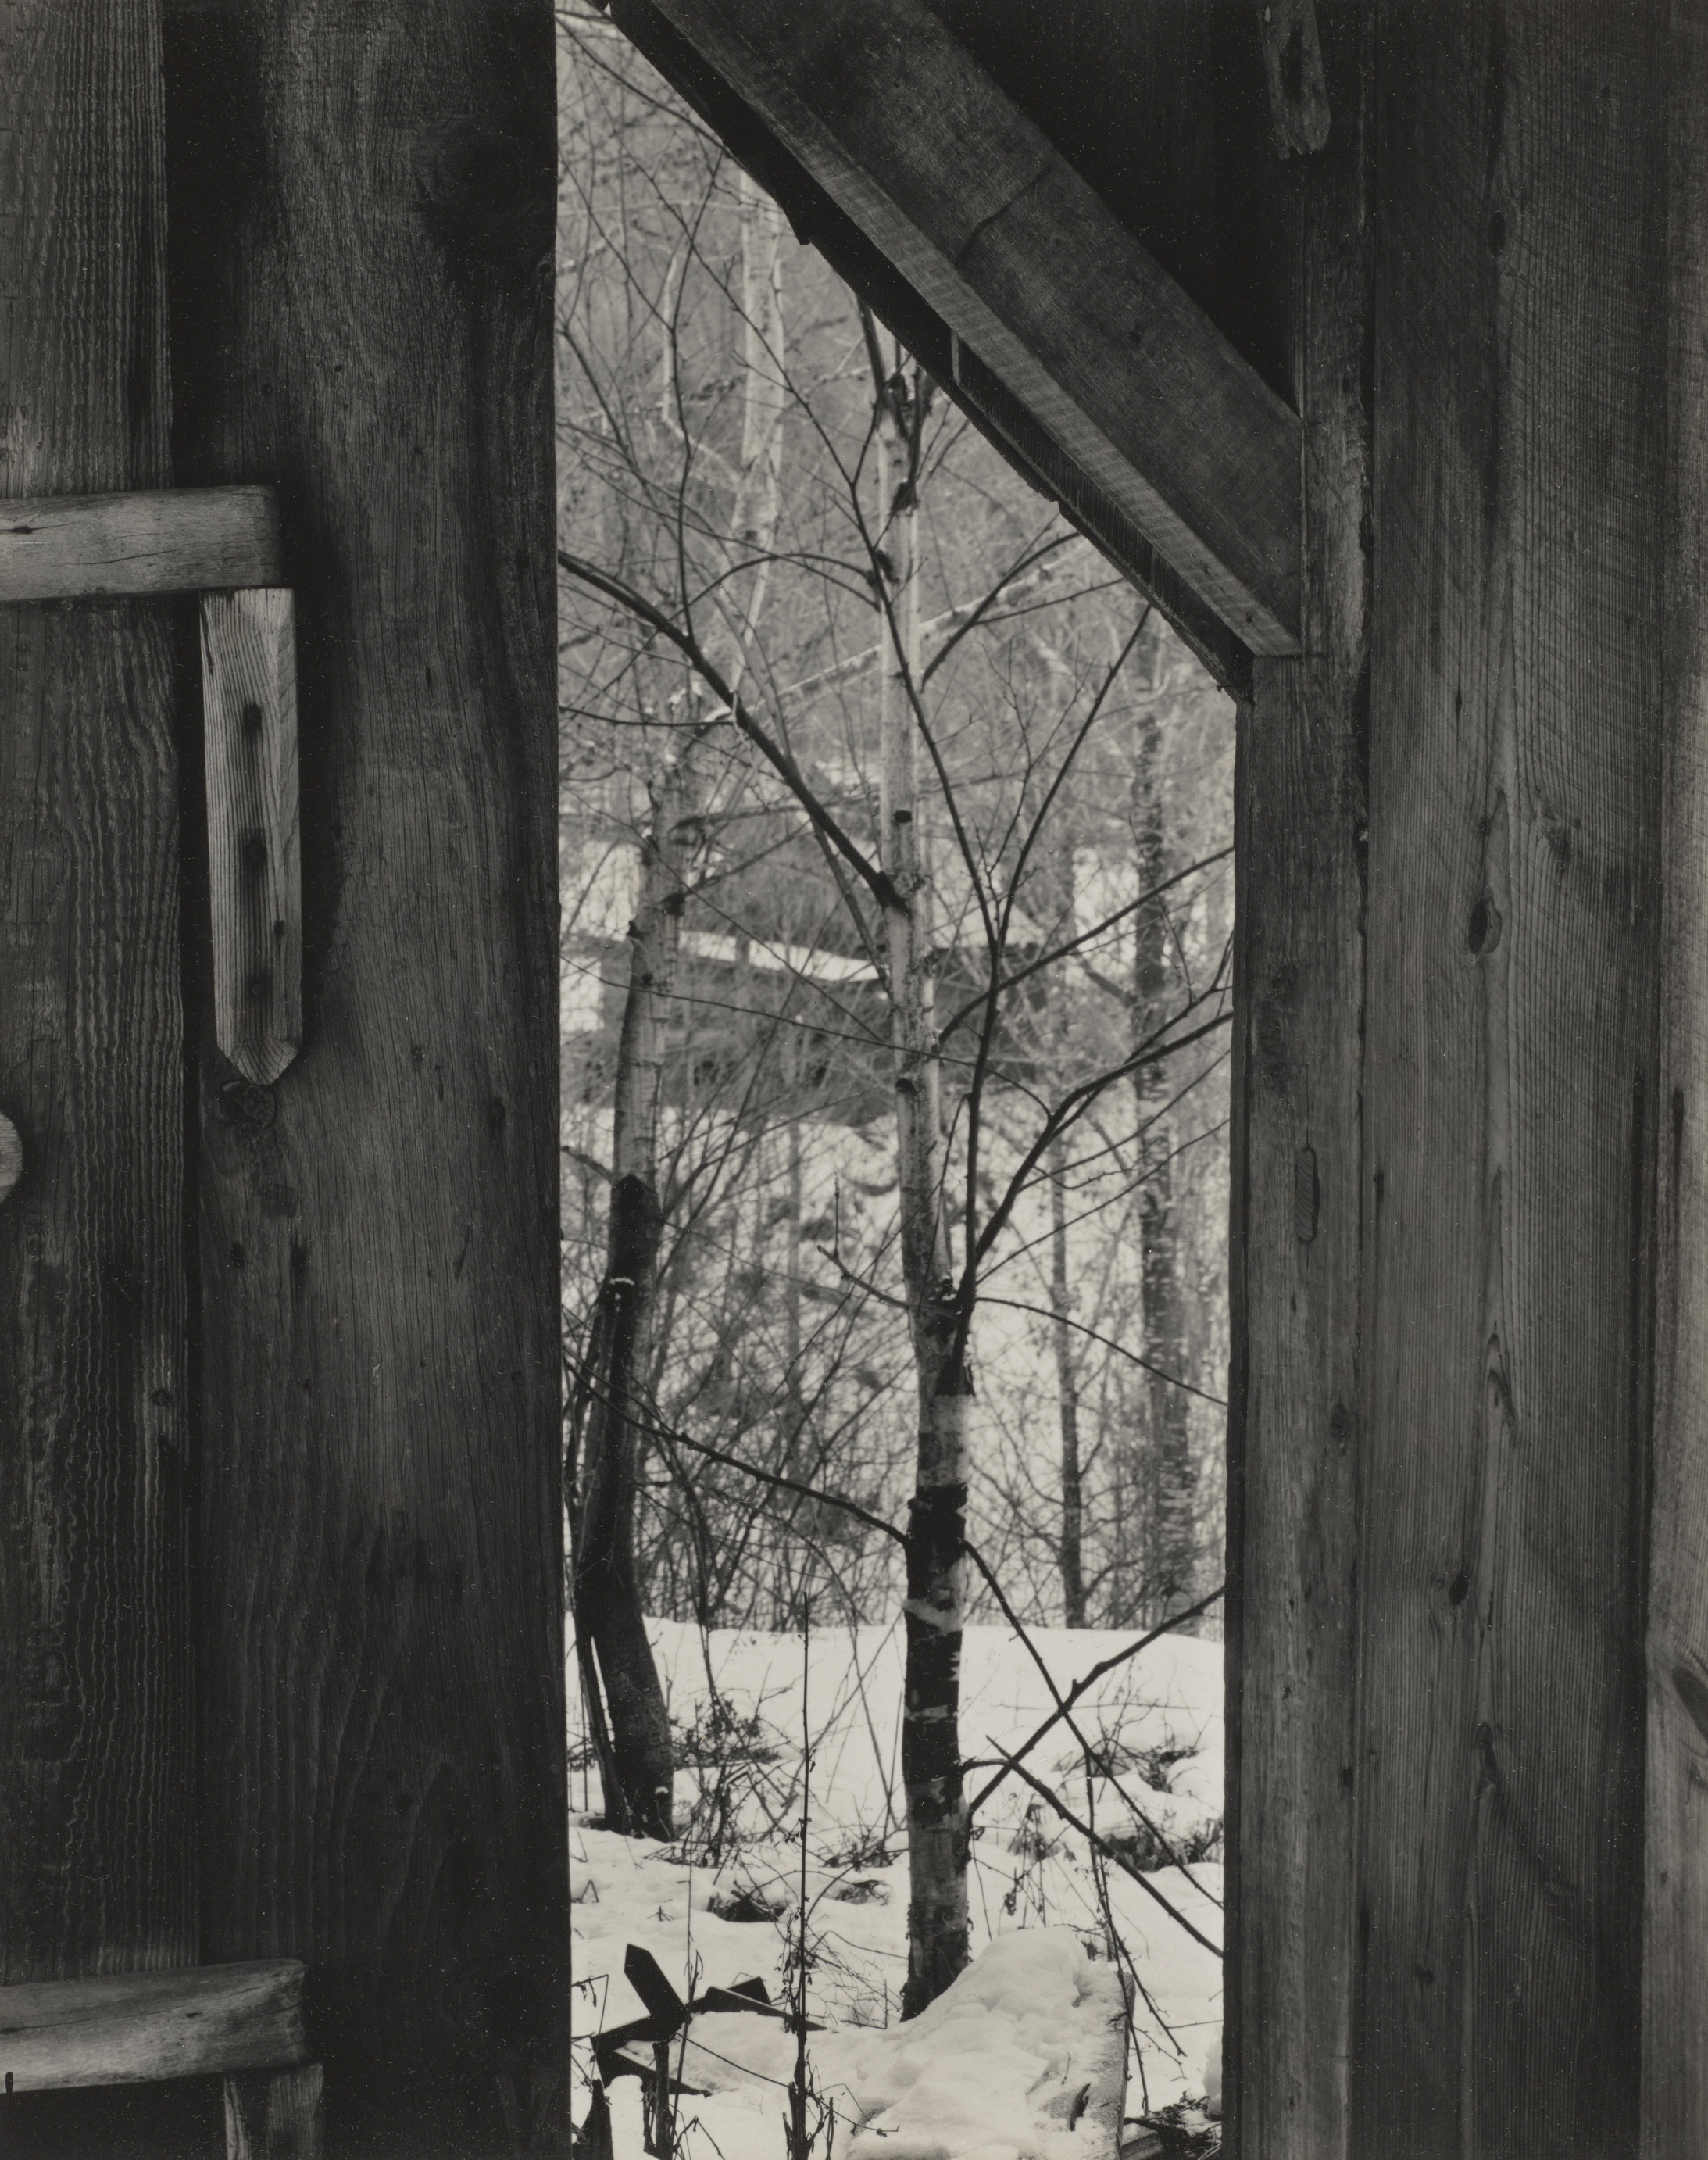 Paul Strand
Toward the Sugar House, Vermont(Blick auf das Sugar House), 1944
Silbergelatine-Abzug, 24.4 × 19.4 cm
Philadelphia Museum of Art, The Paul Strand Collection
© Estate of Paul Strand